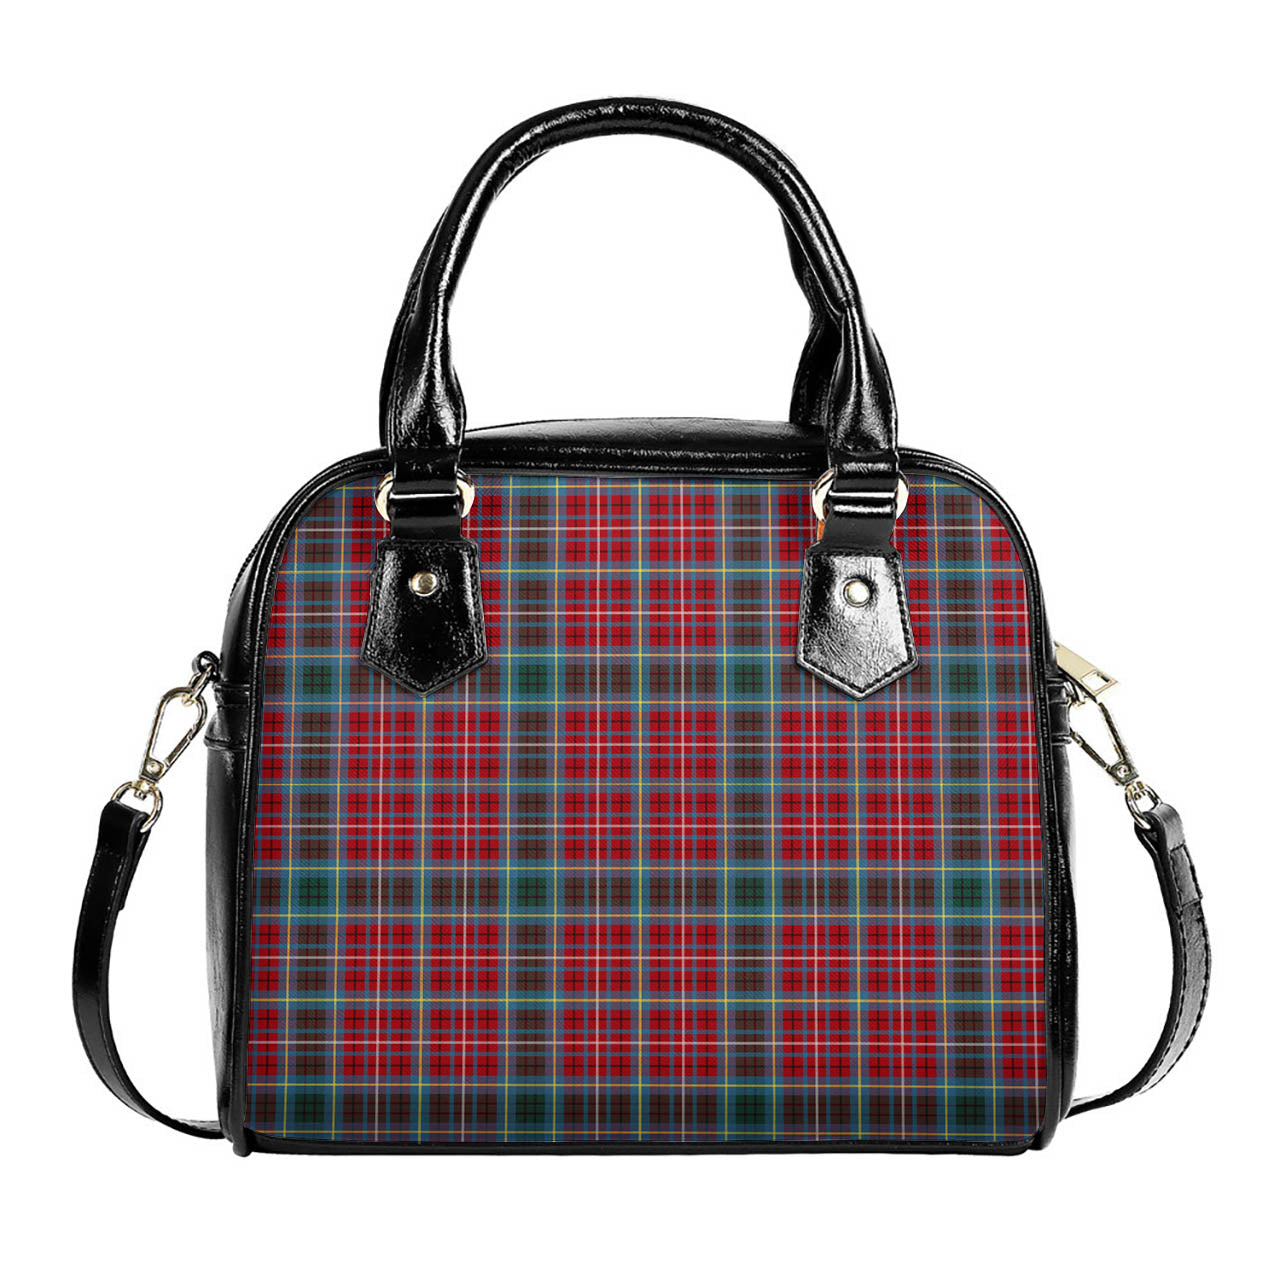 British Columbia Province Canada Tartan Shoulder Handbags One Size 6*25*22 cm - Tartanvibesclothing